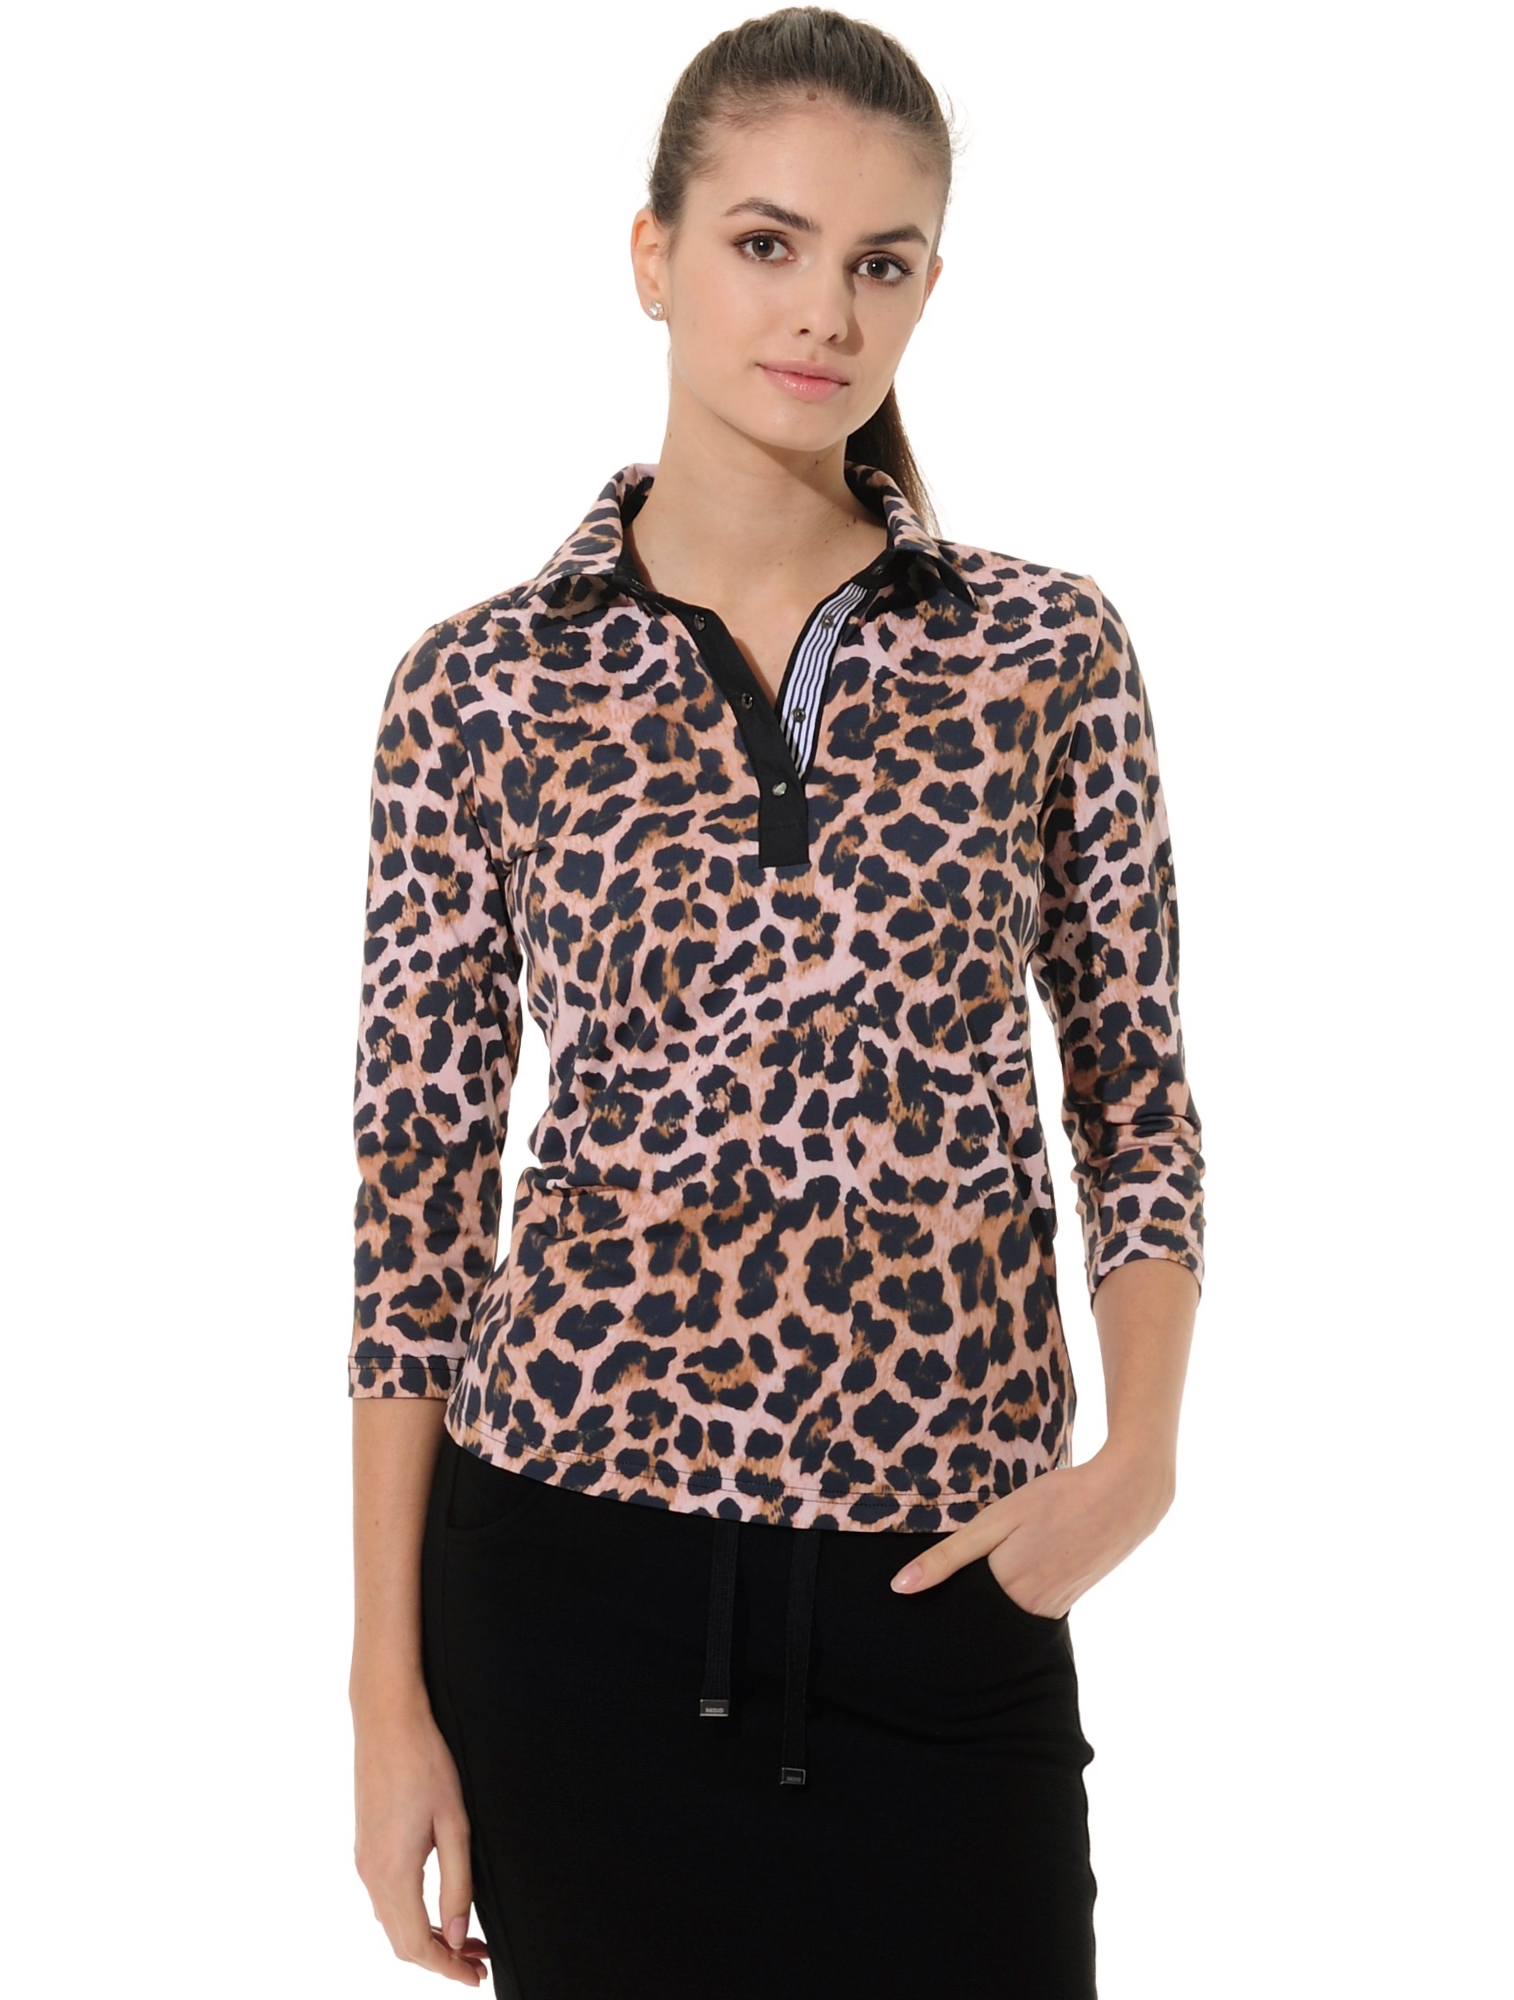 Leopard print golf polo shirt natural